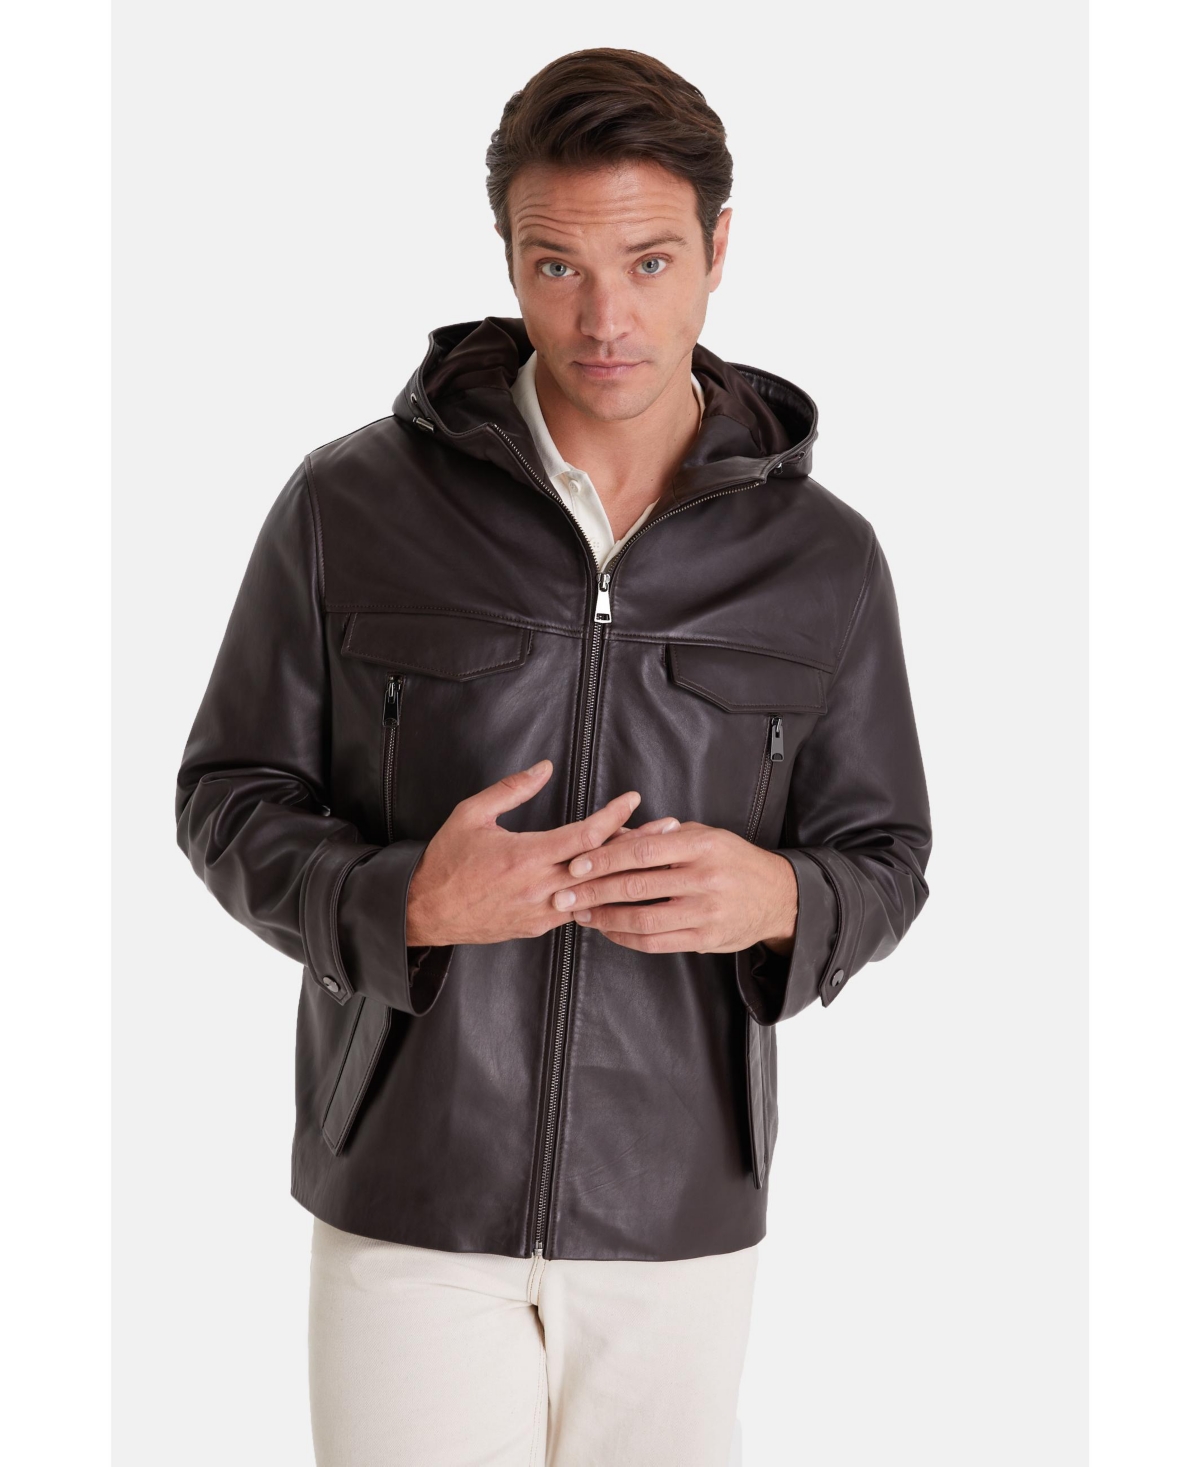 Men's Leather Jacket, Brown - Brown